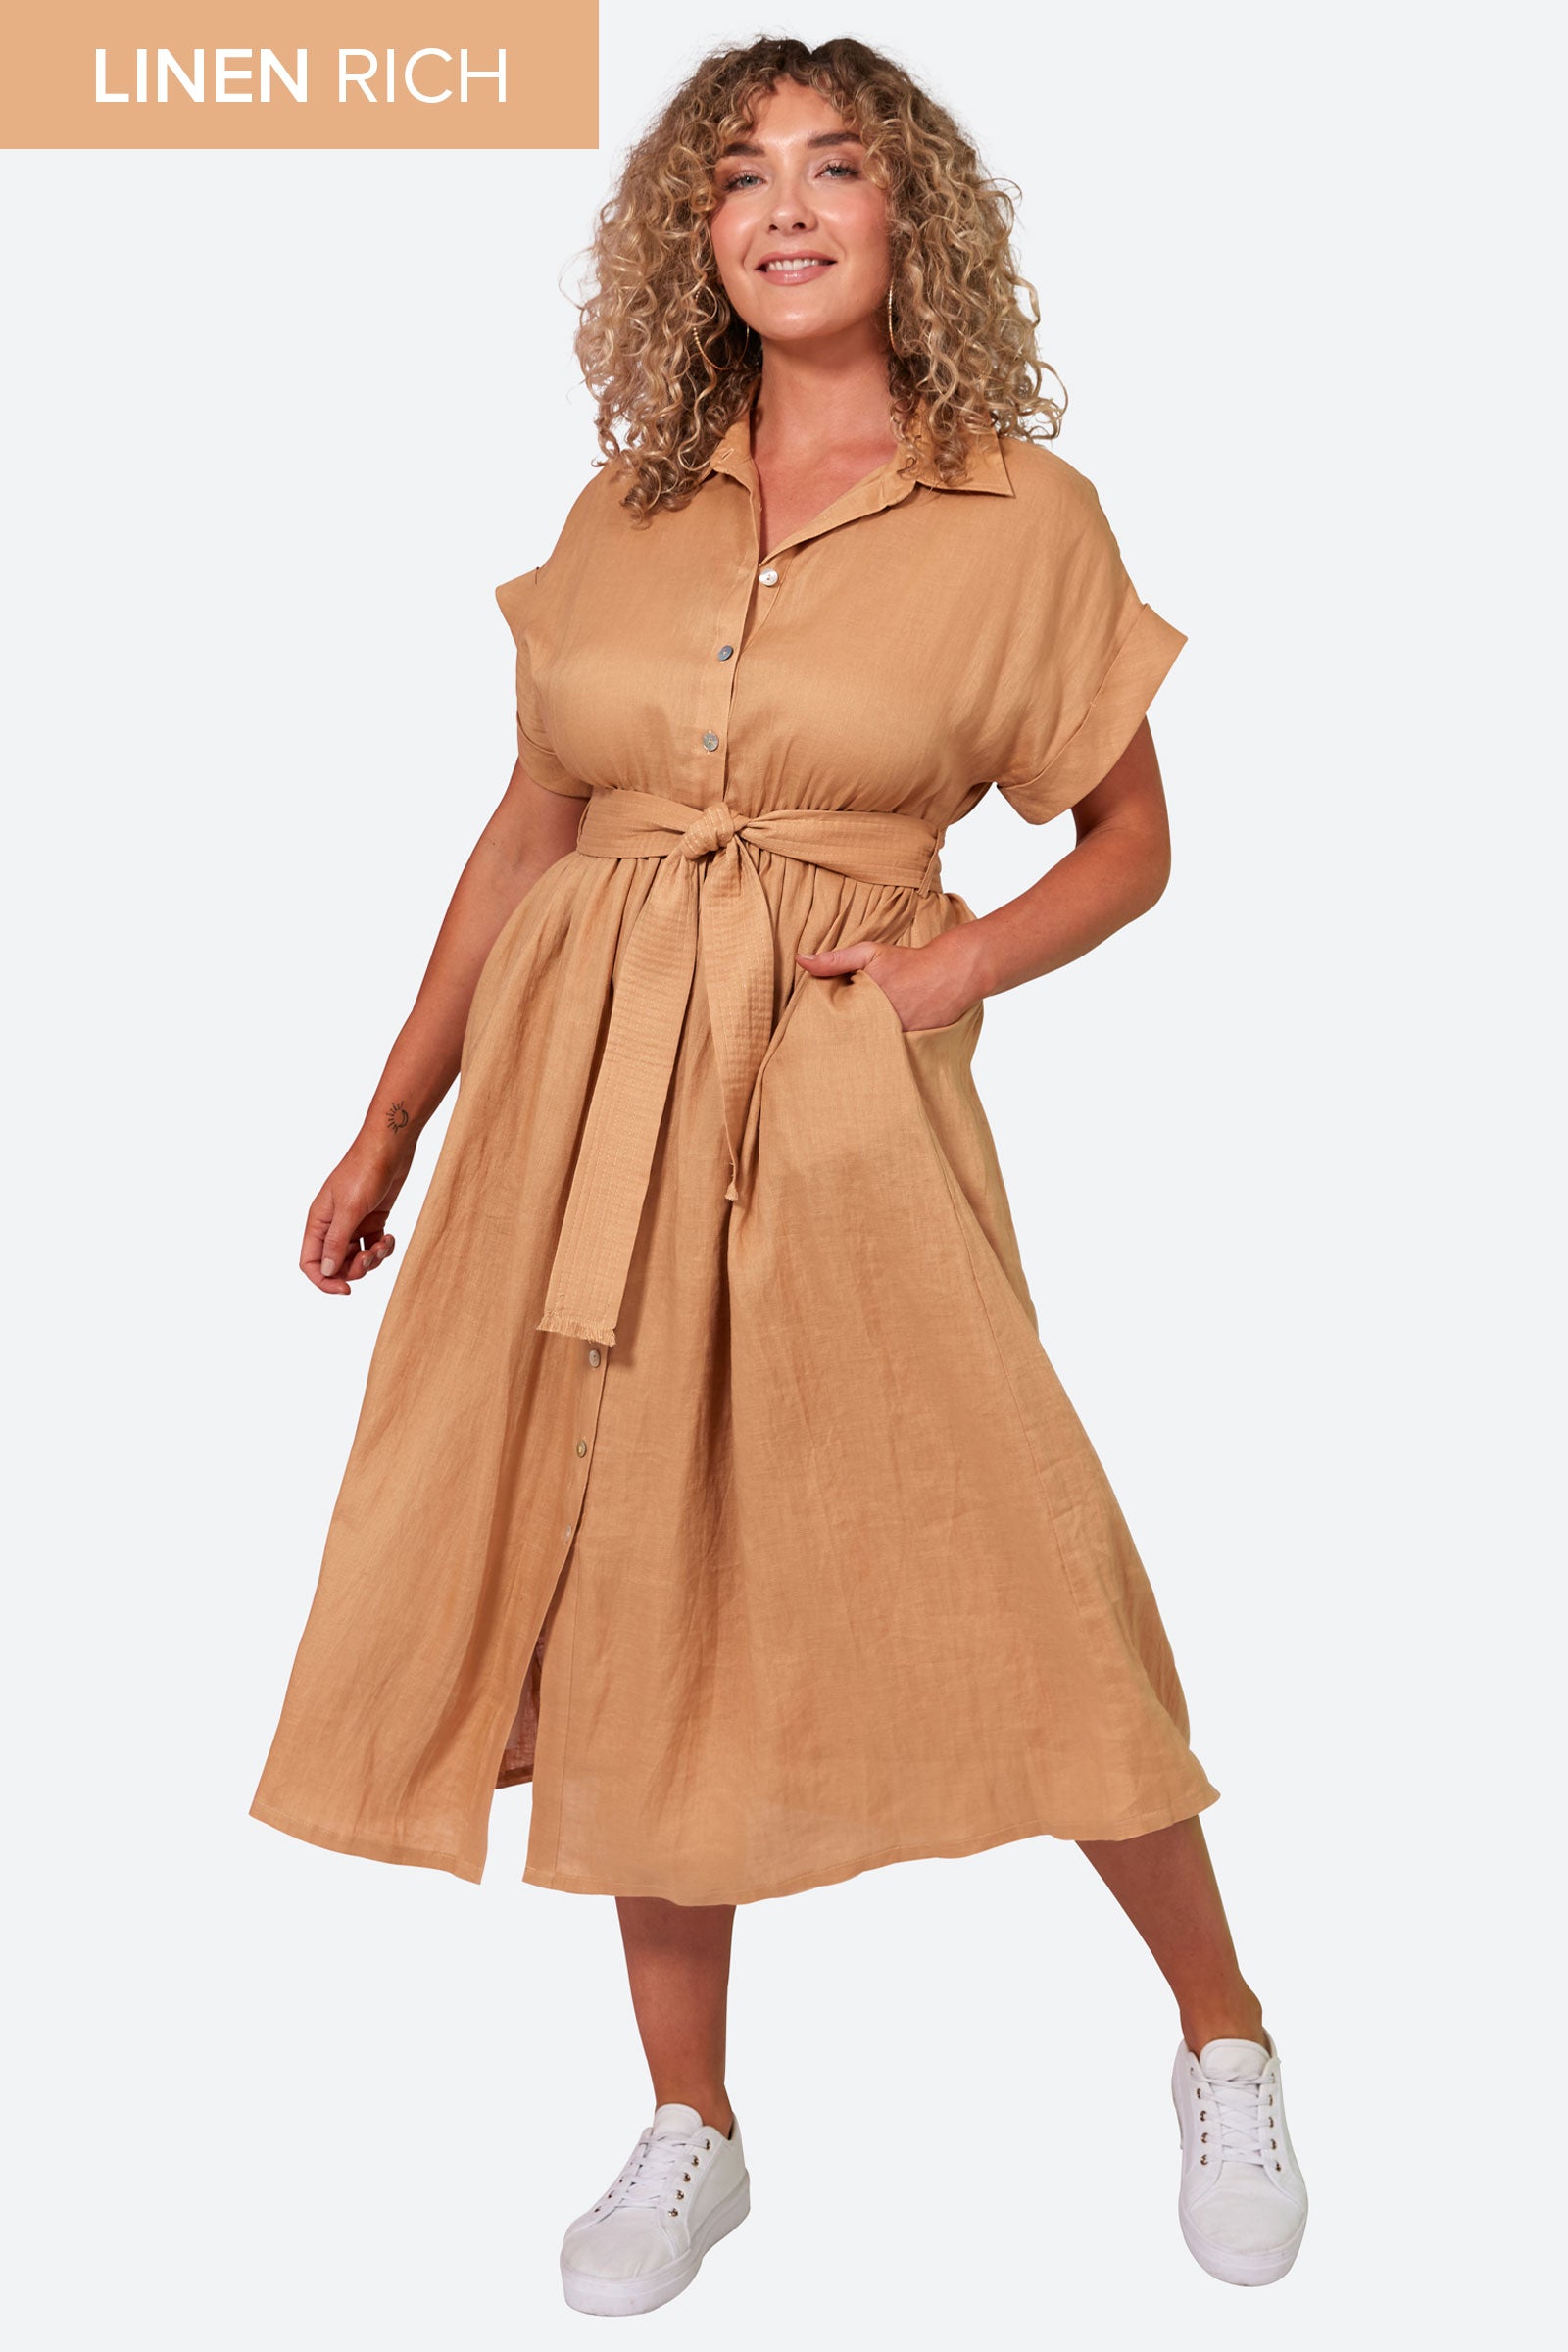 La Vie Shirt Dress - Caramel - eb&ive Clothing - Shirt Dress Maxi Linen